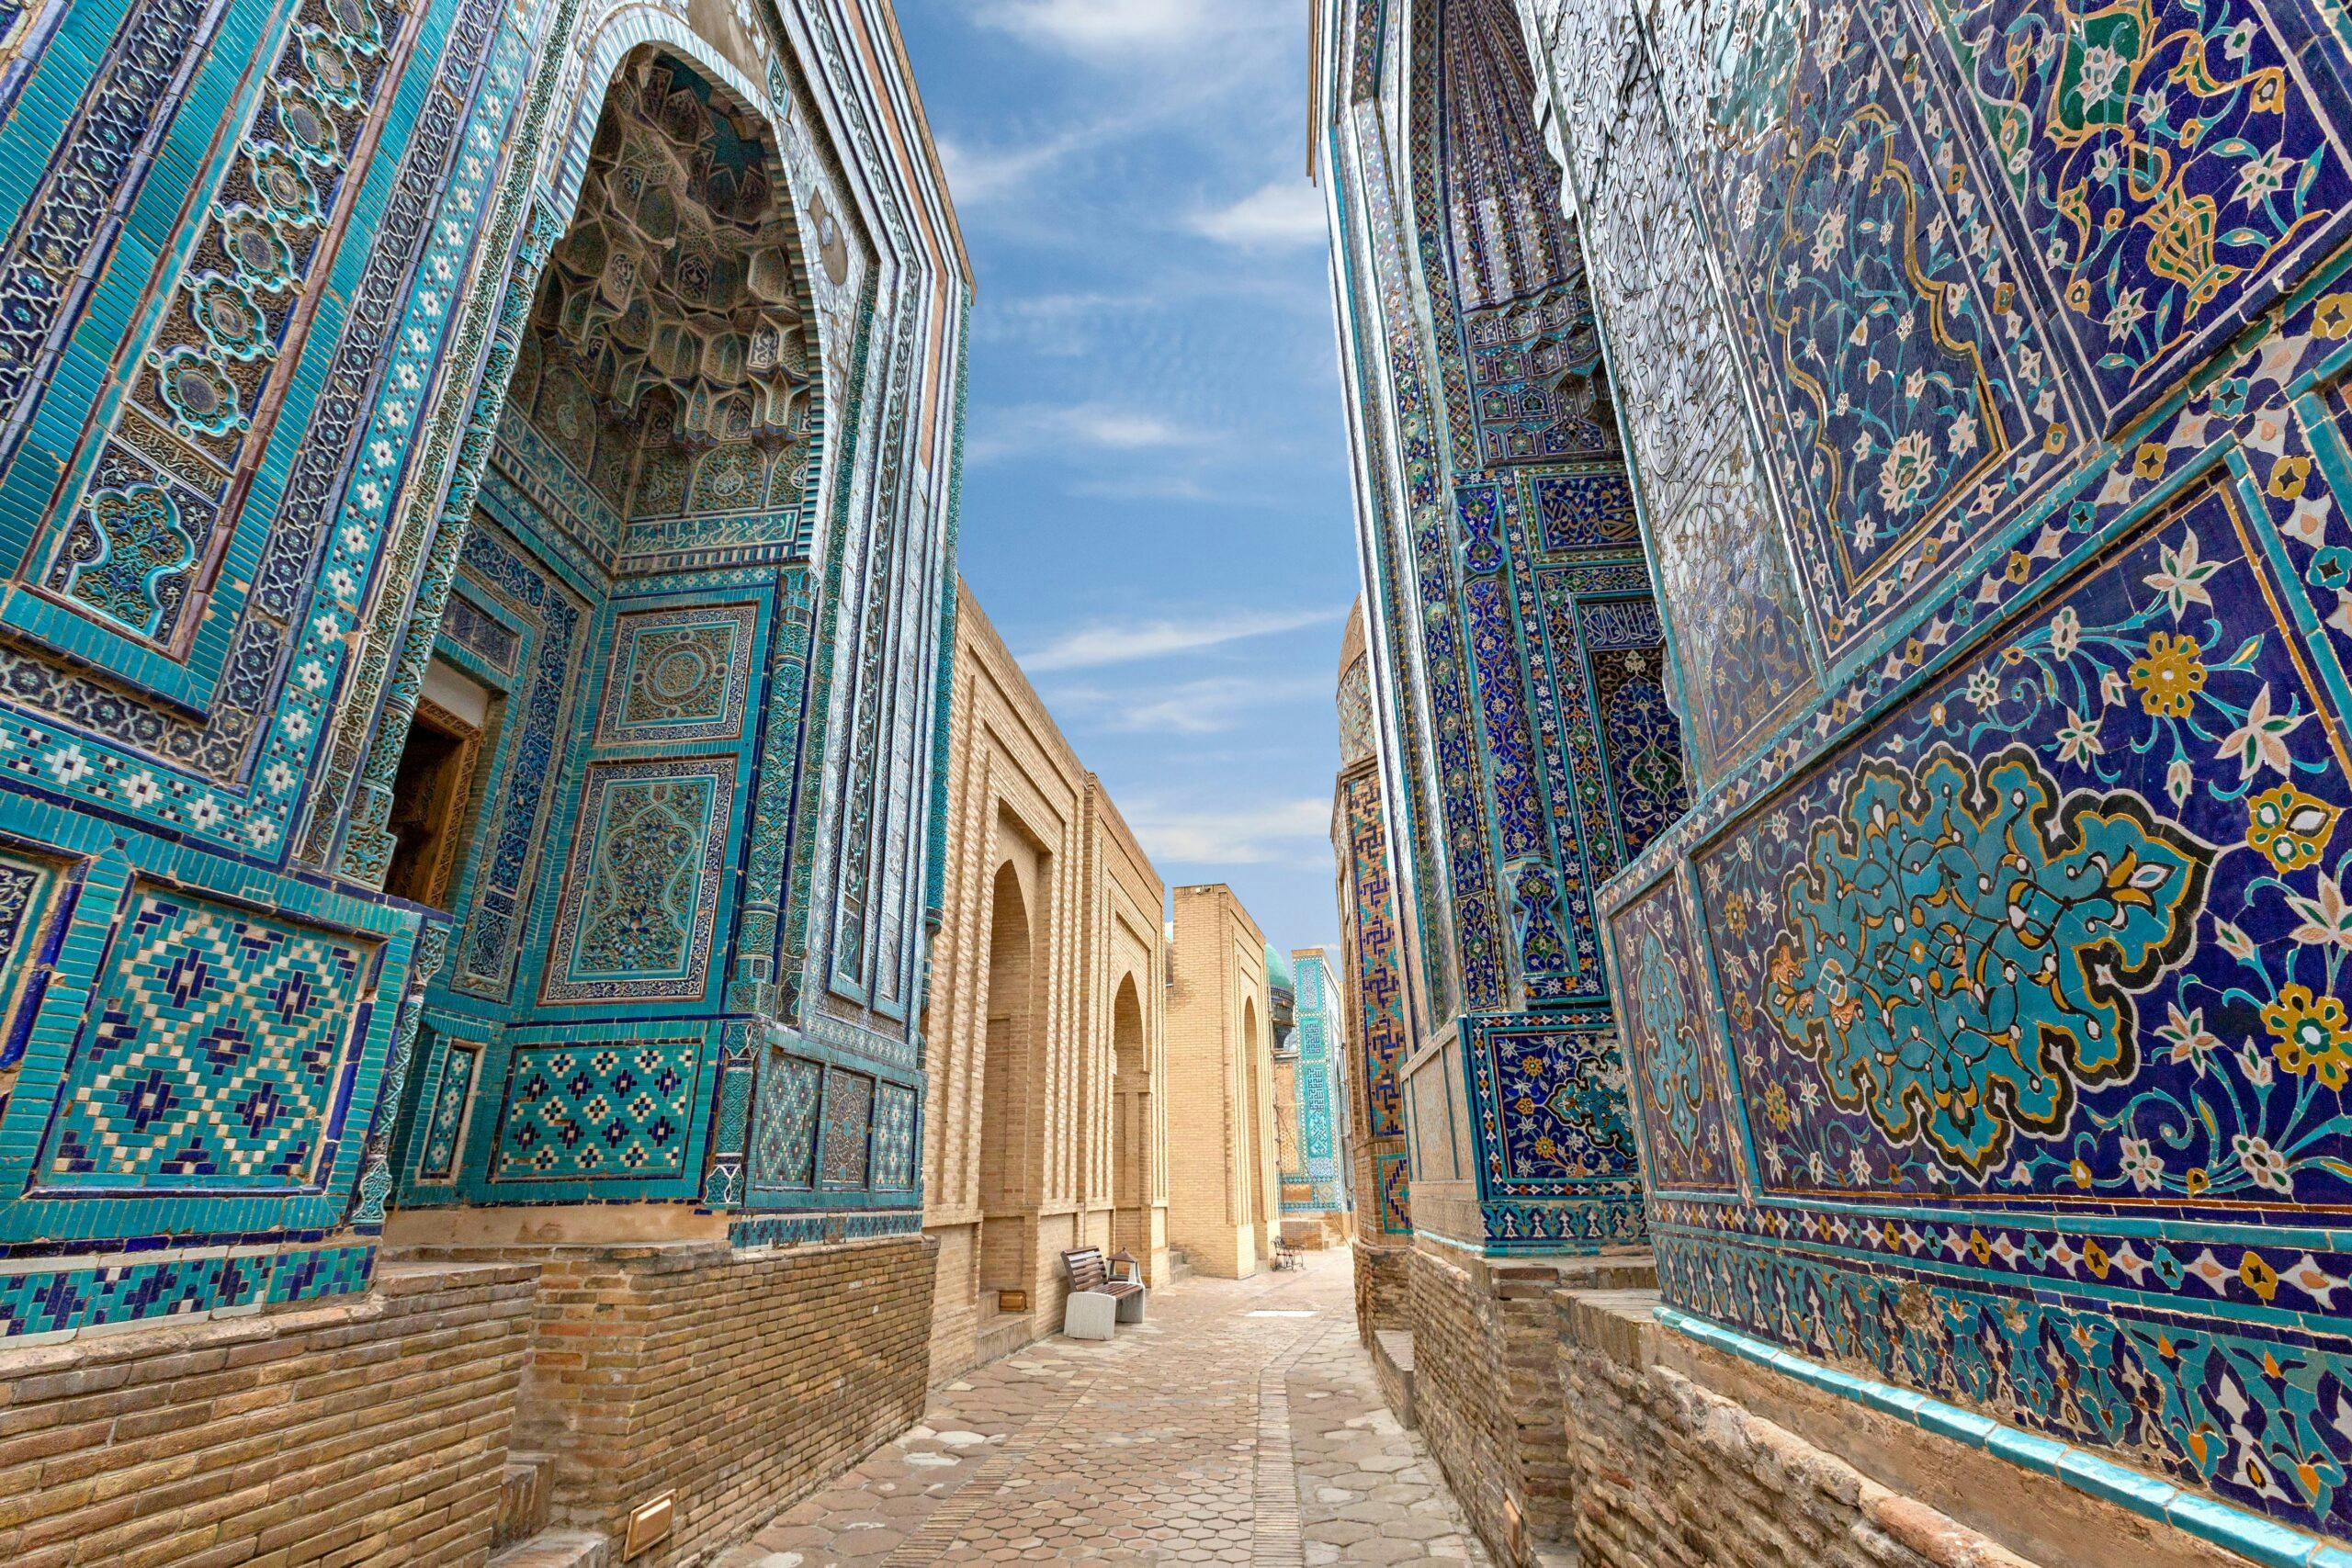 We're reimagining a fairer way to visit Uzbekistan